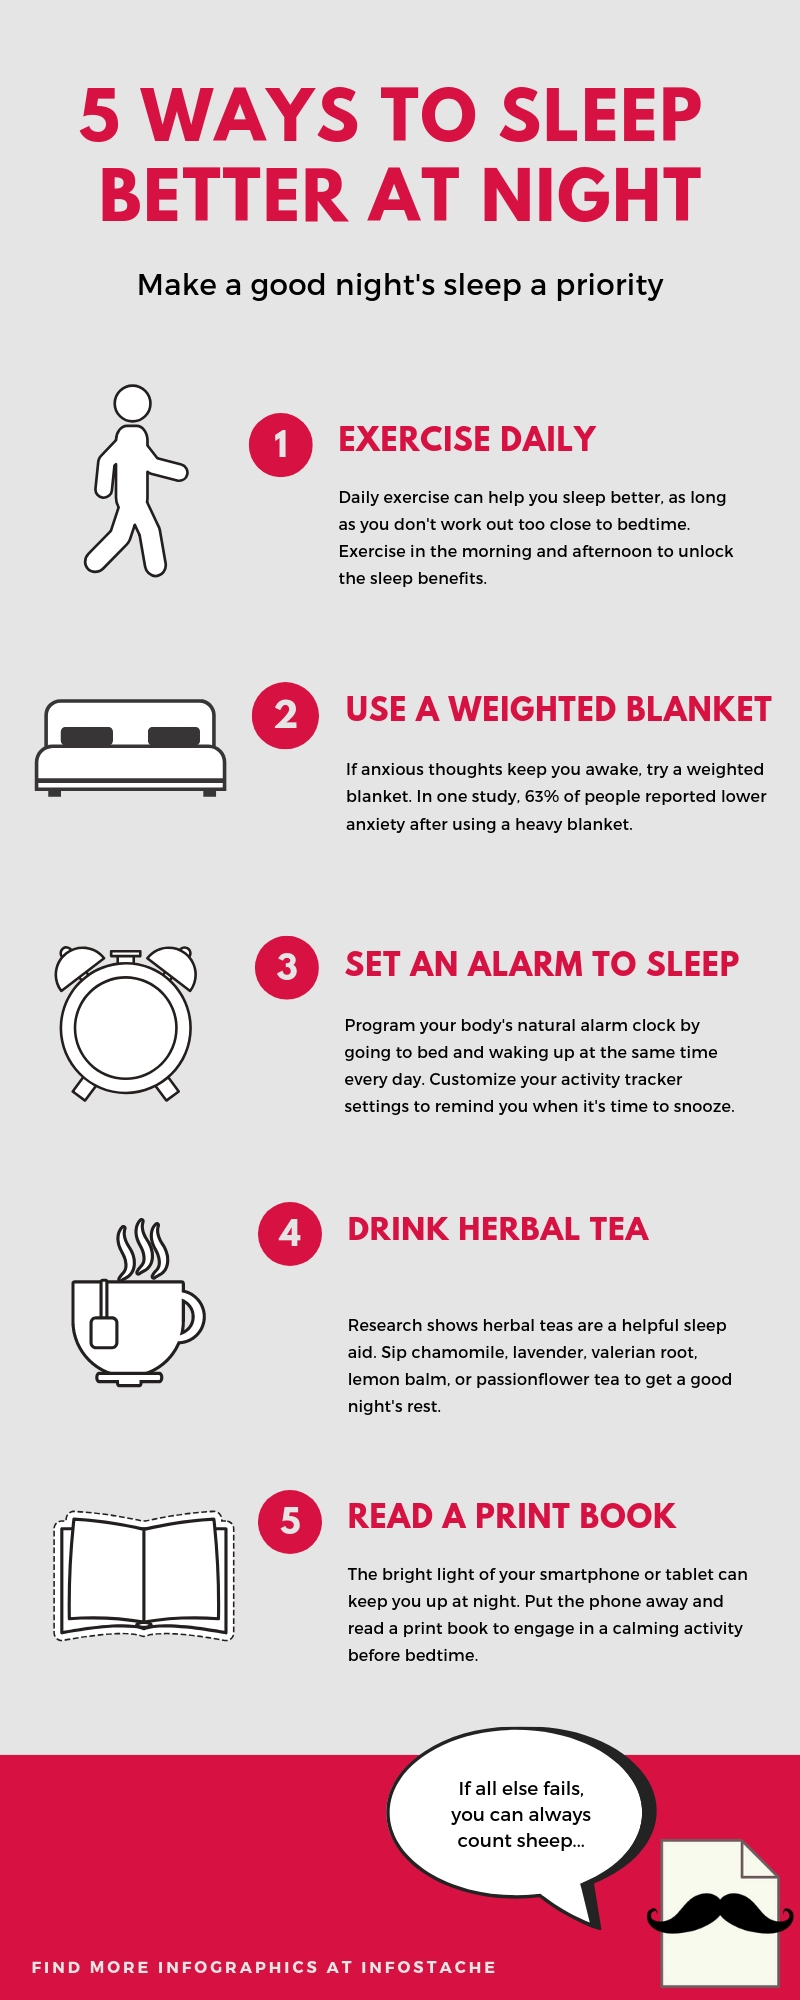 5 Ways to Sleep Better at Night - Infographic